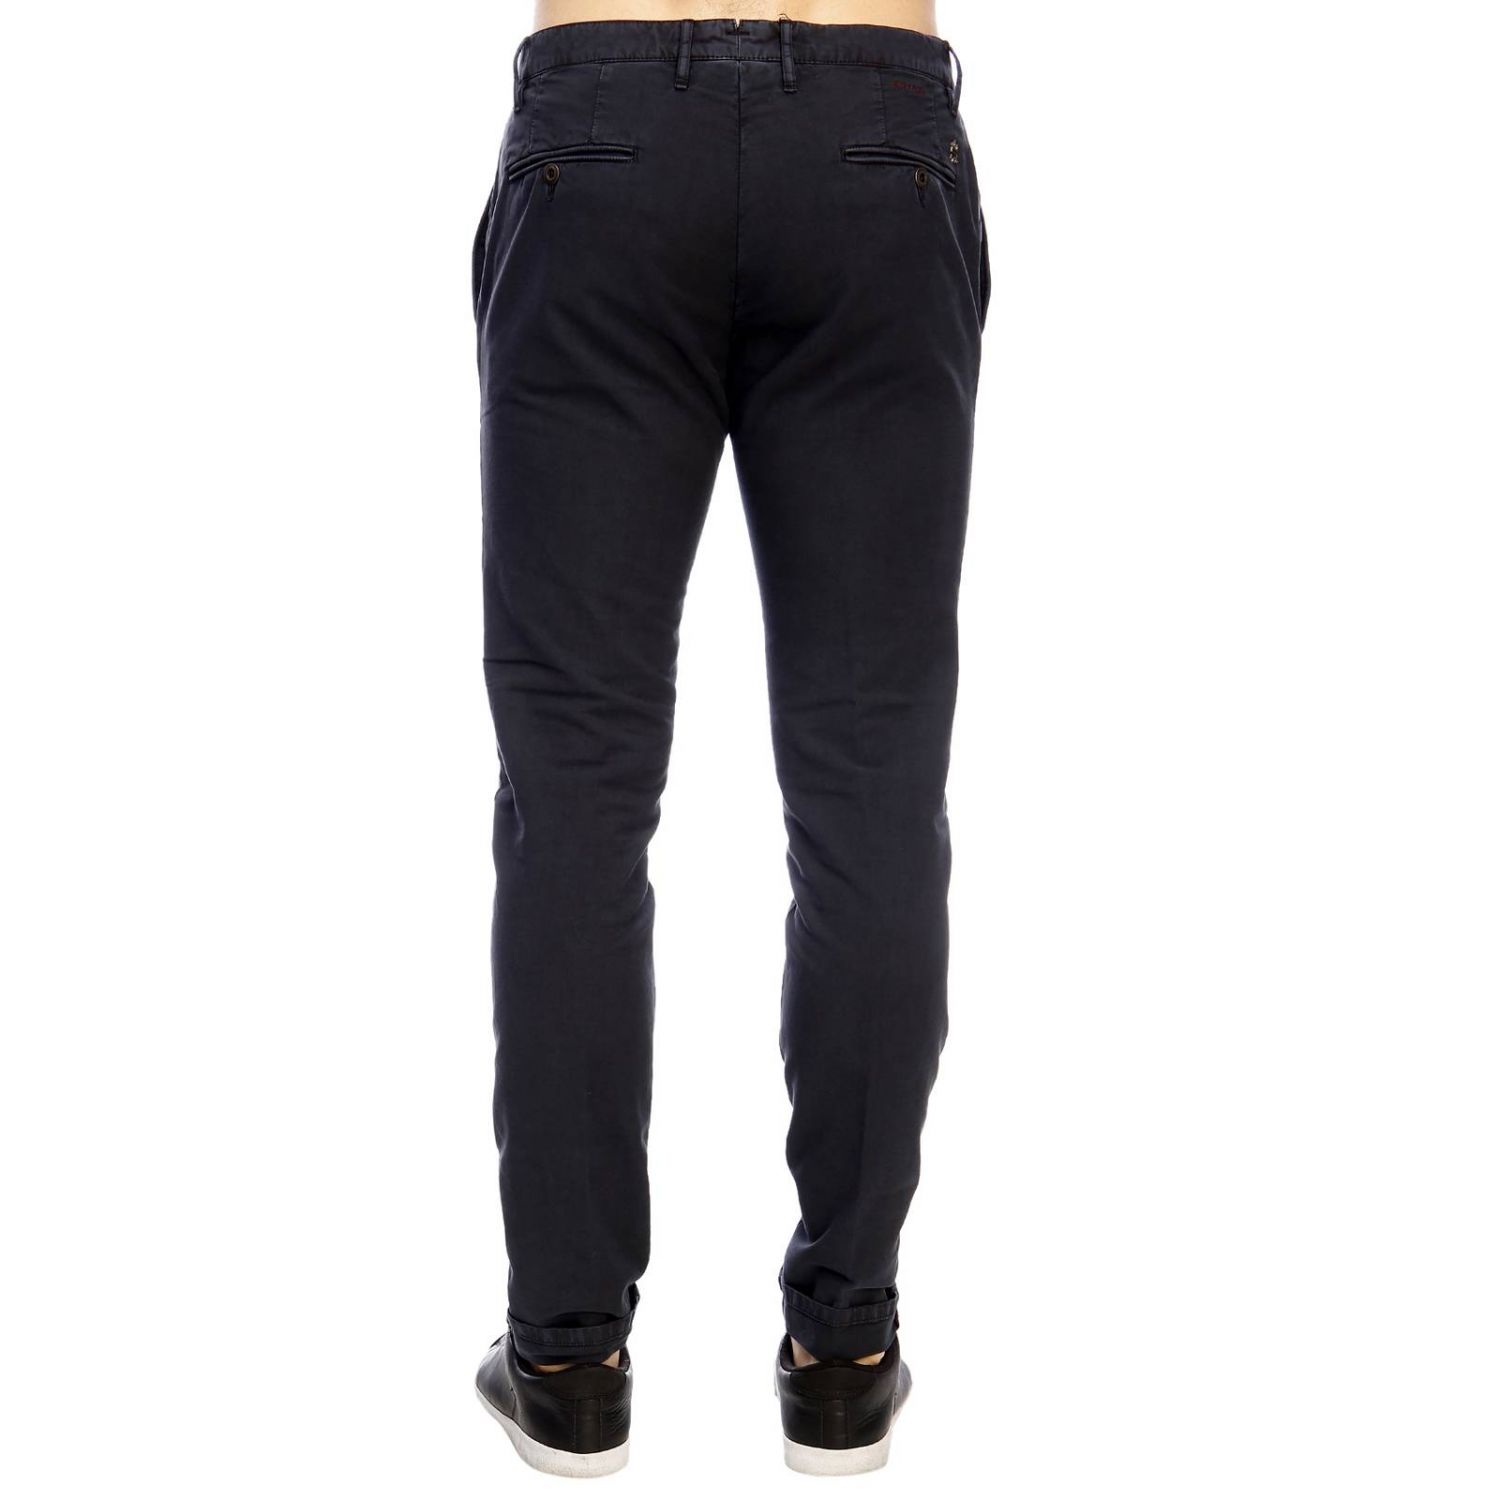 Incotex Outlet: pants for man - Blue | Incotex pants 10S104 9665R ...